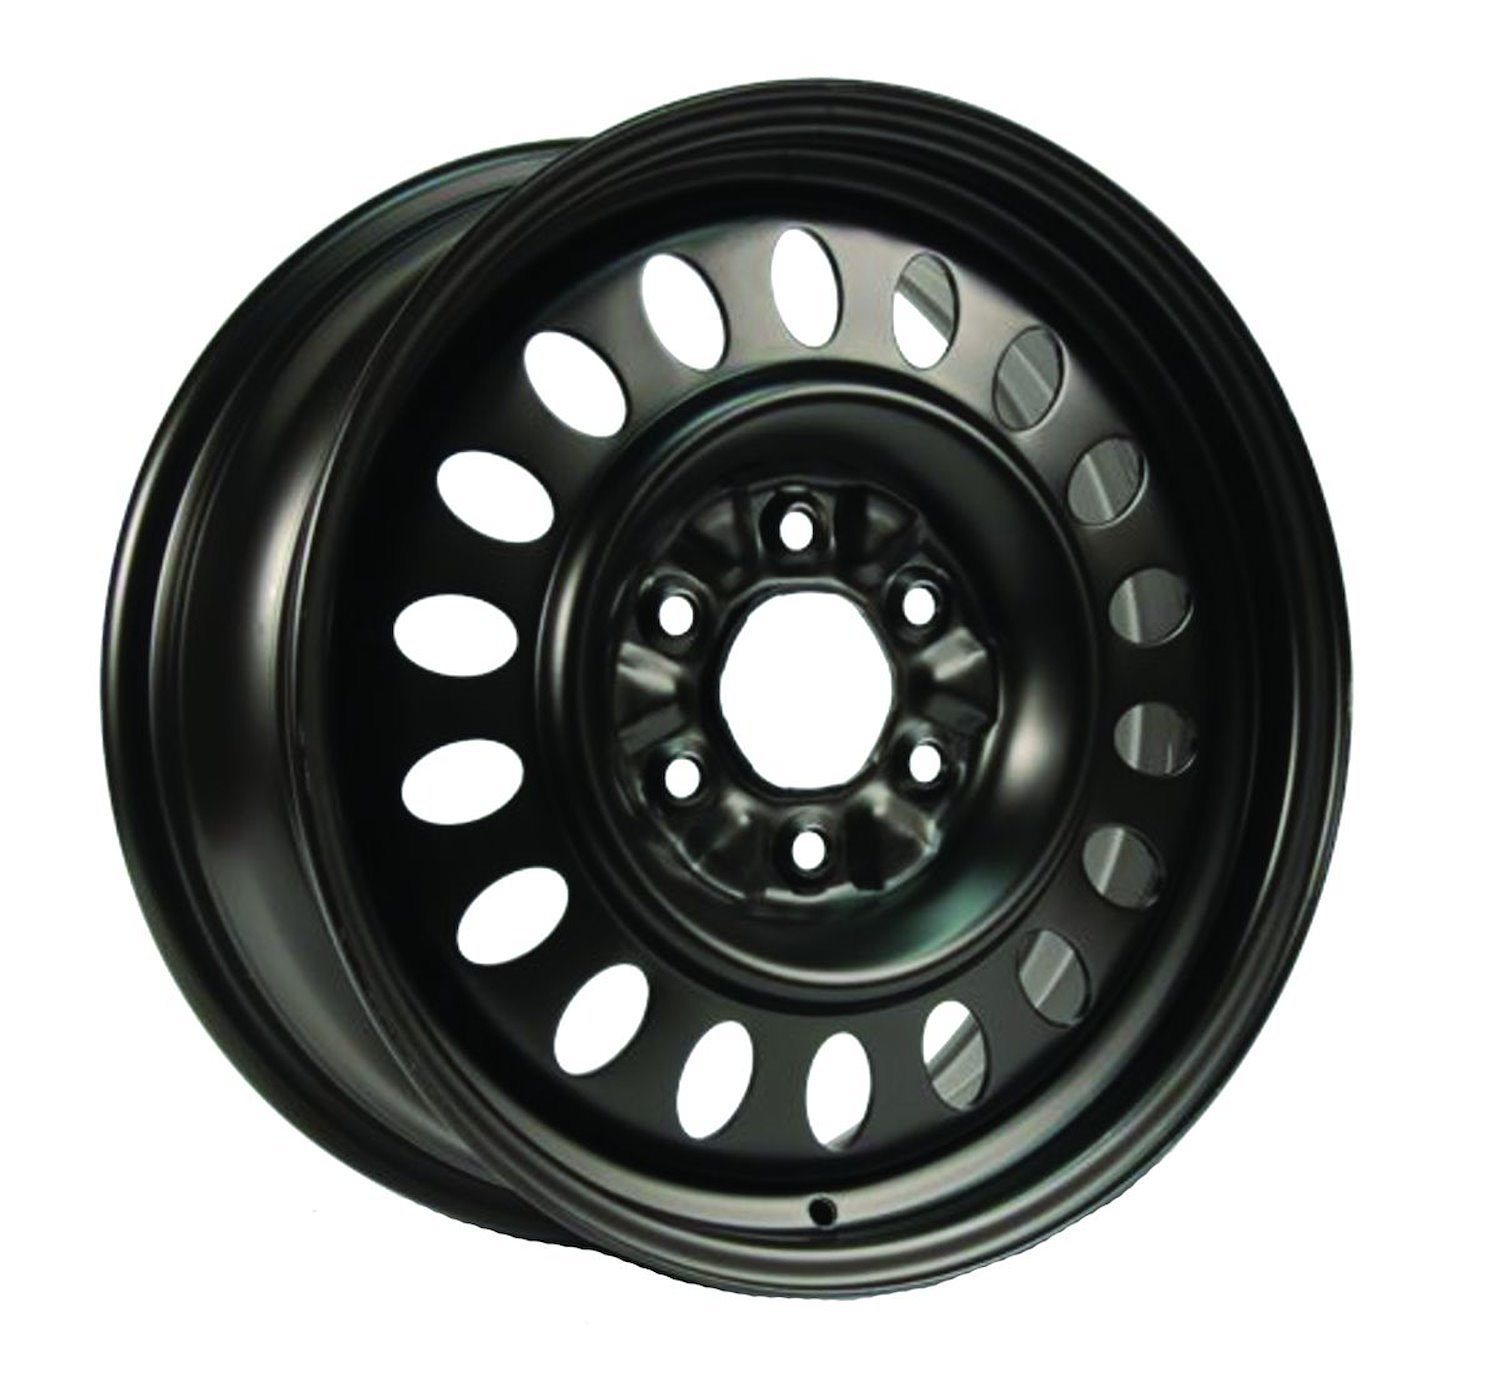 X47627 Steel Wheel [Size: 17" x 7"] Black Finish